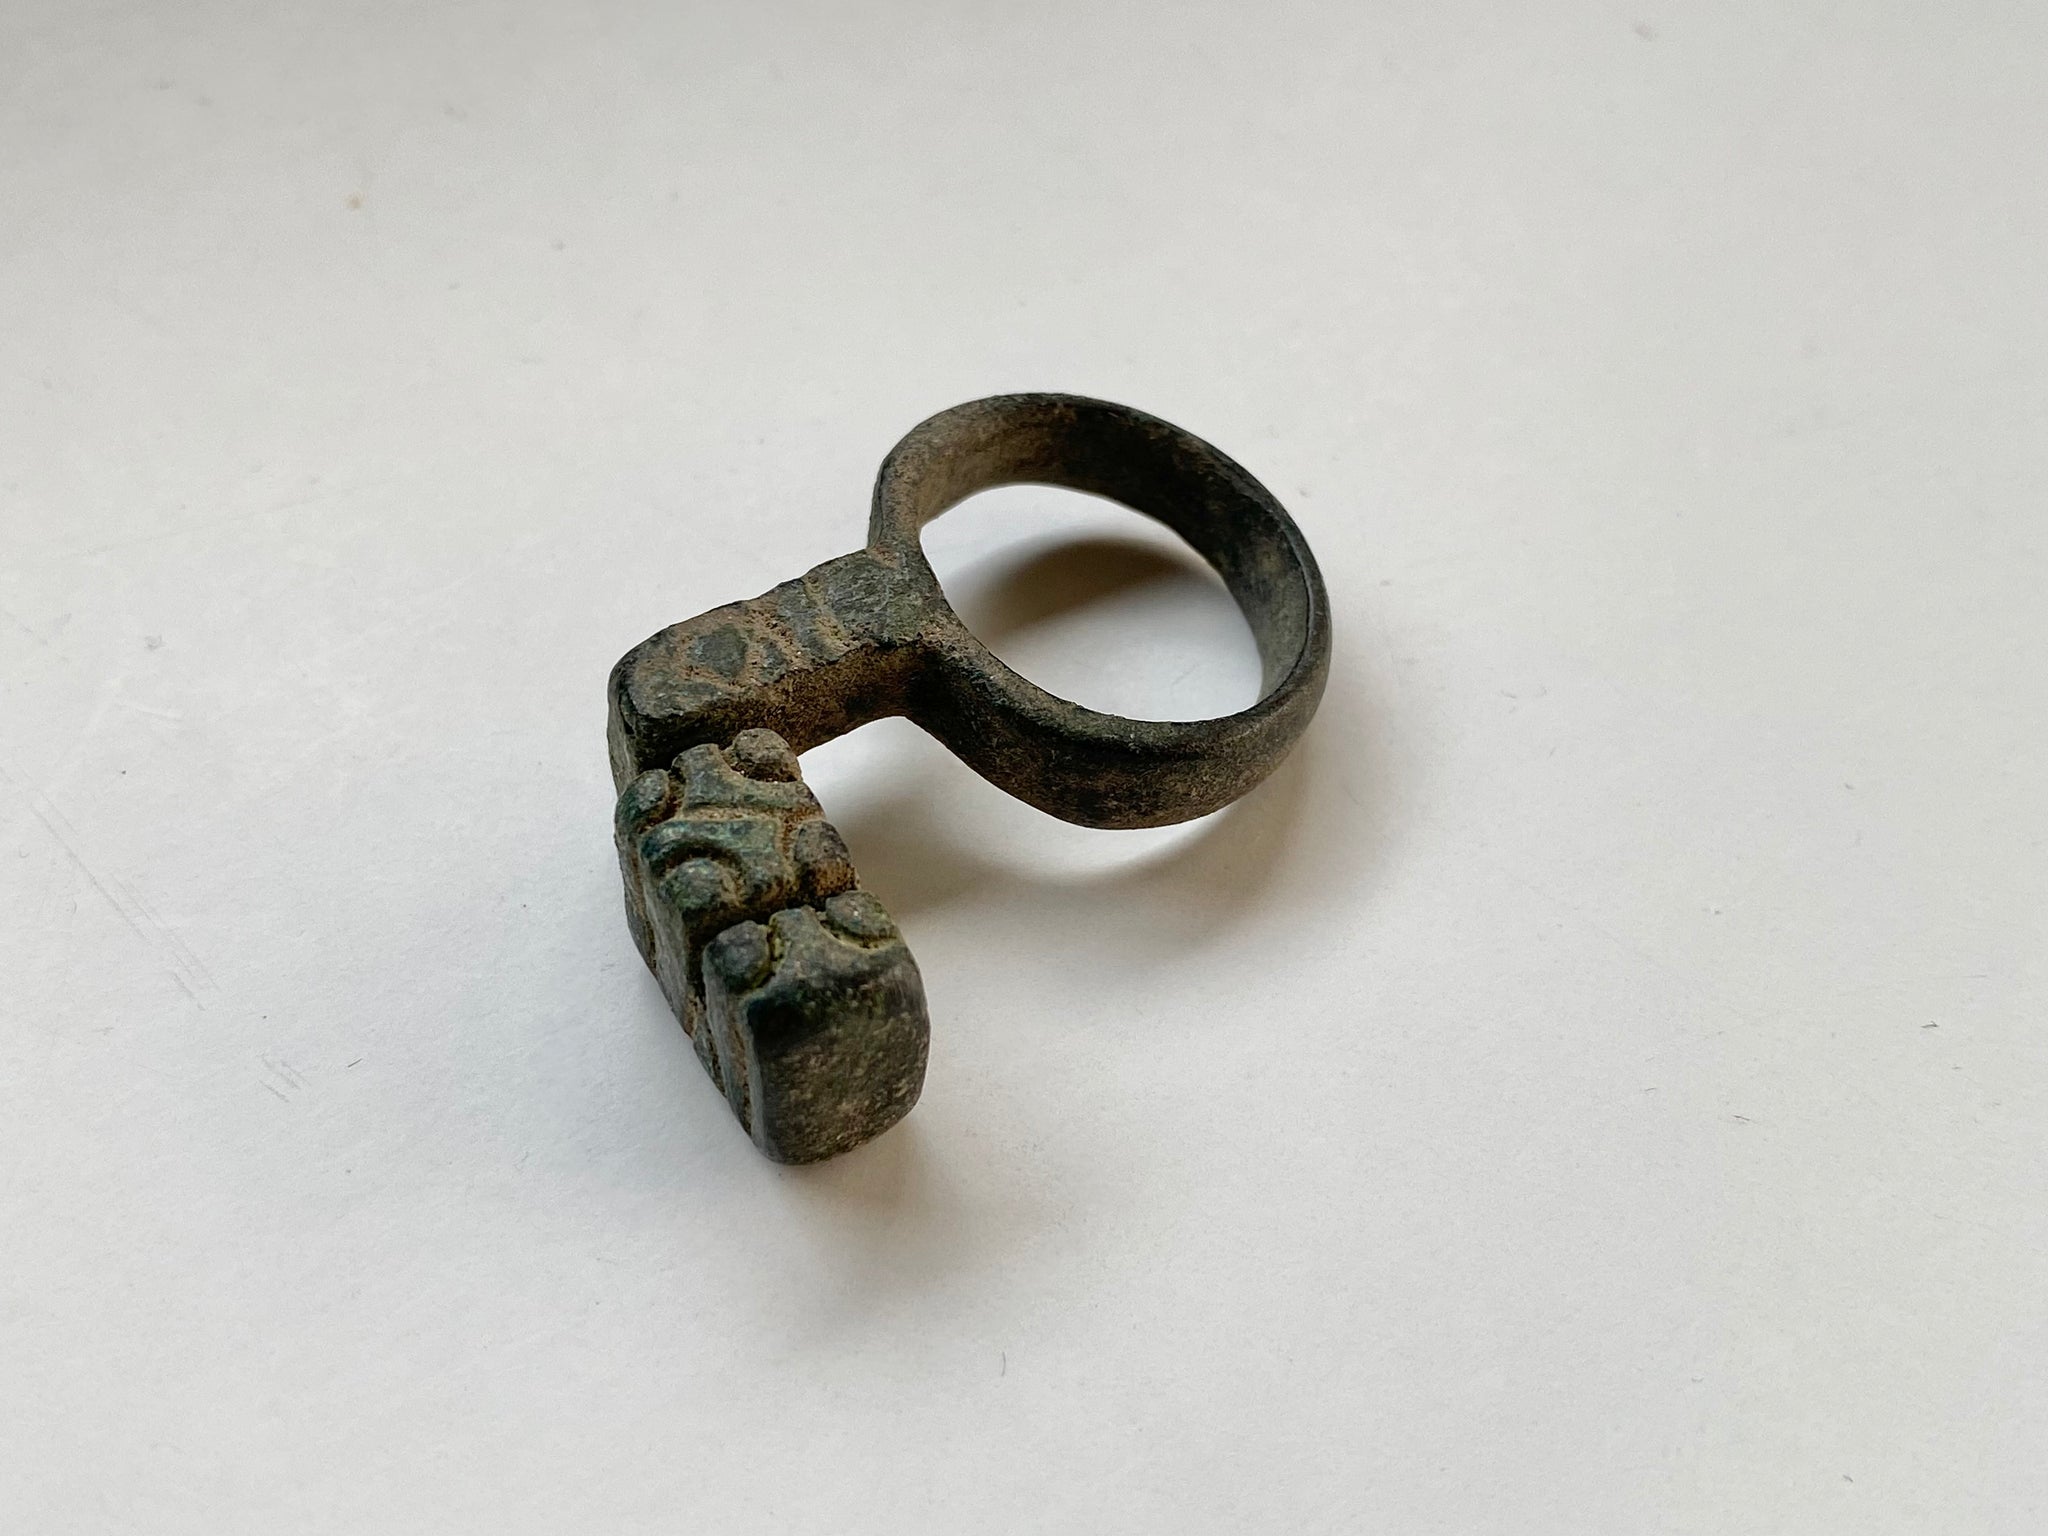 A Roman Ladies Bronze Key Ring - Source Vintage